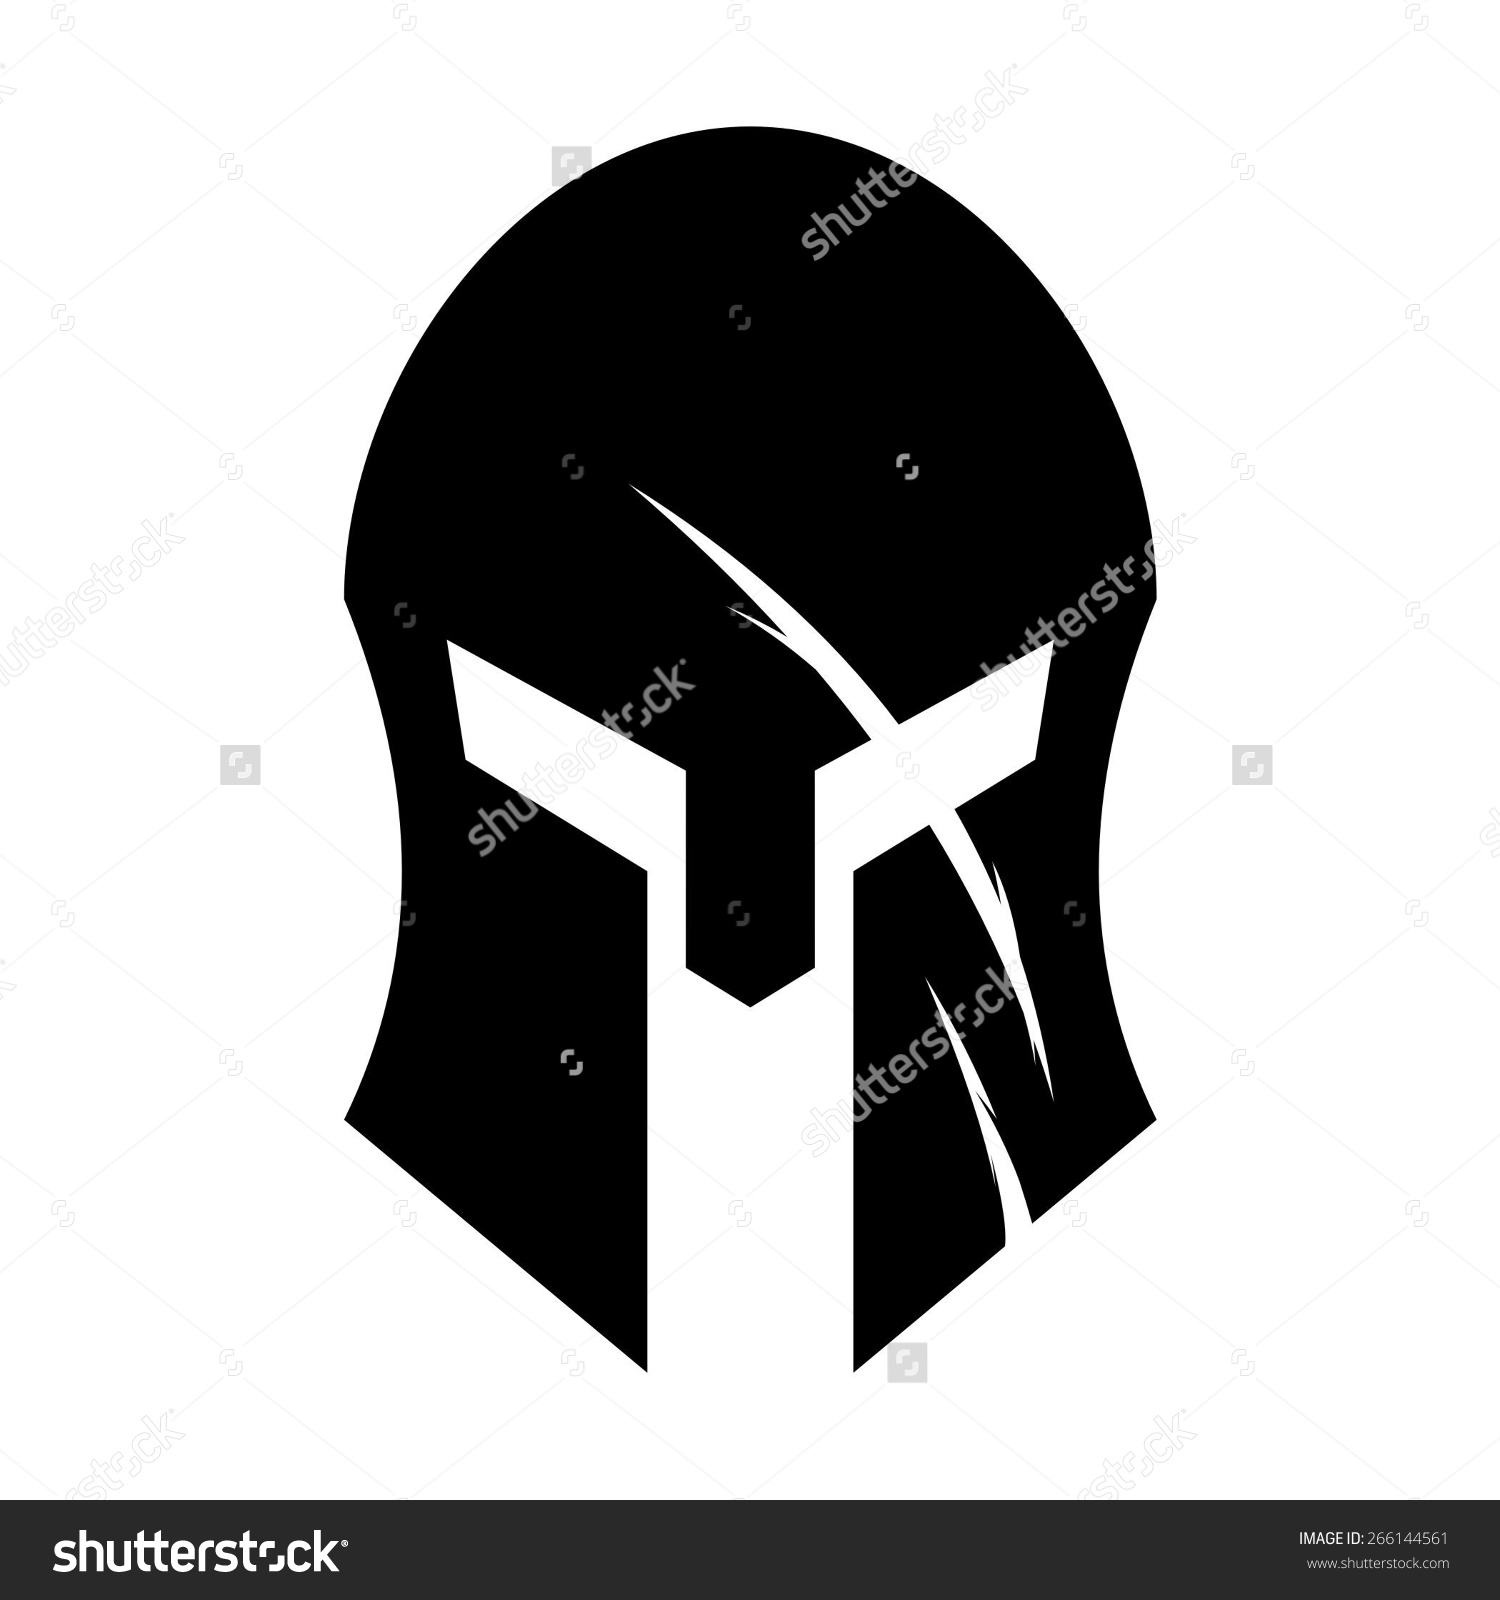 stock-vector-spartan-helmet-266144561.jpg (1500×1600)